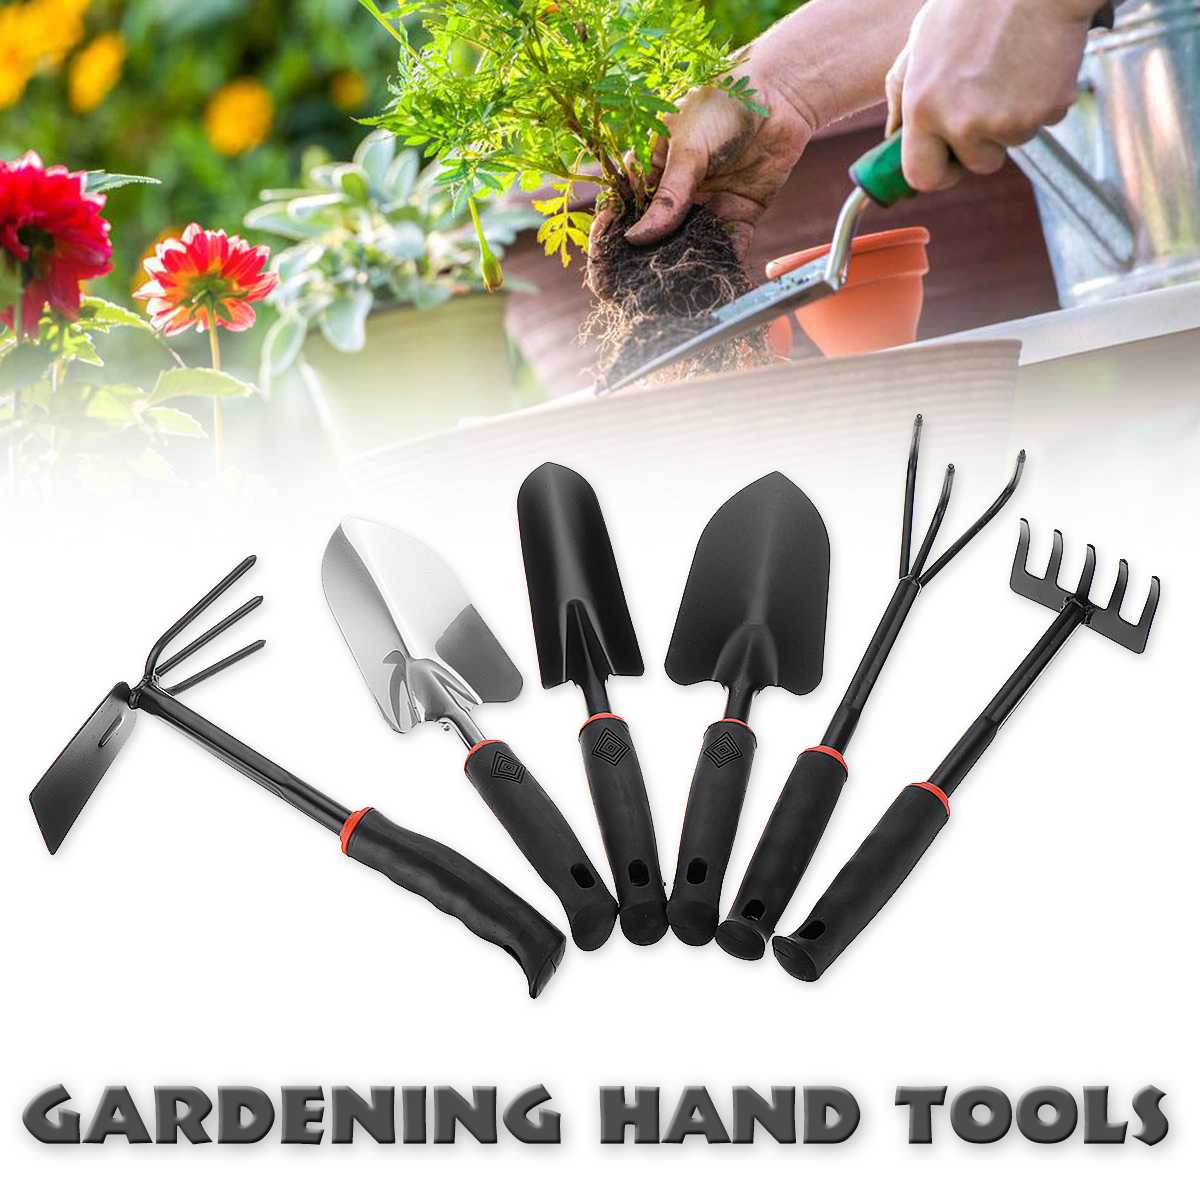 Useful gardening tools - 53 - Smart and Cool Stuff